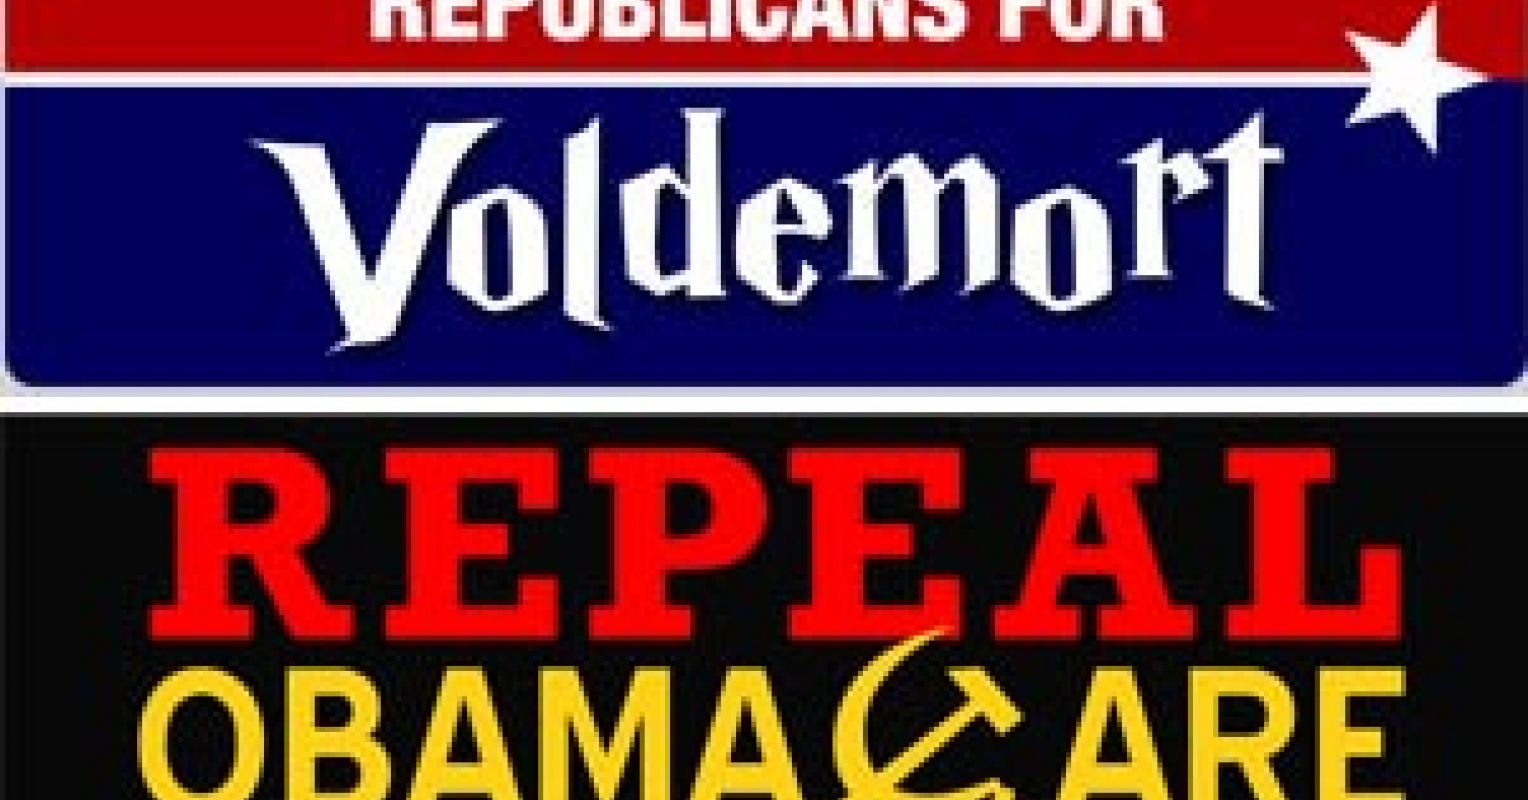 conservative bumper stickers political